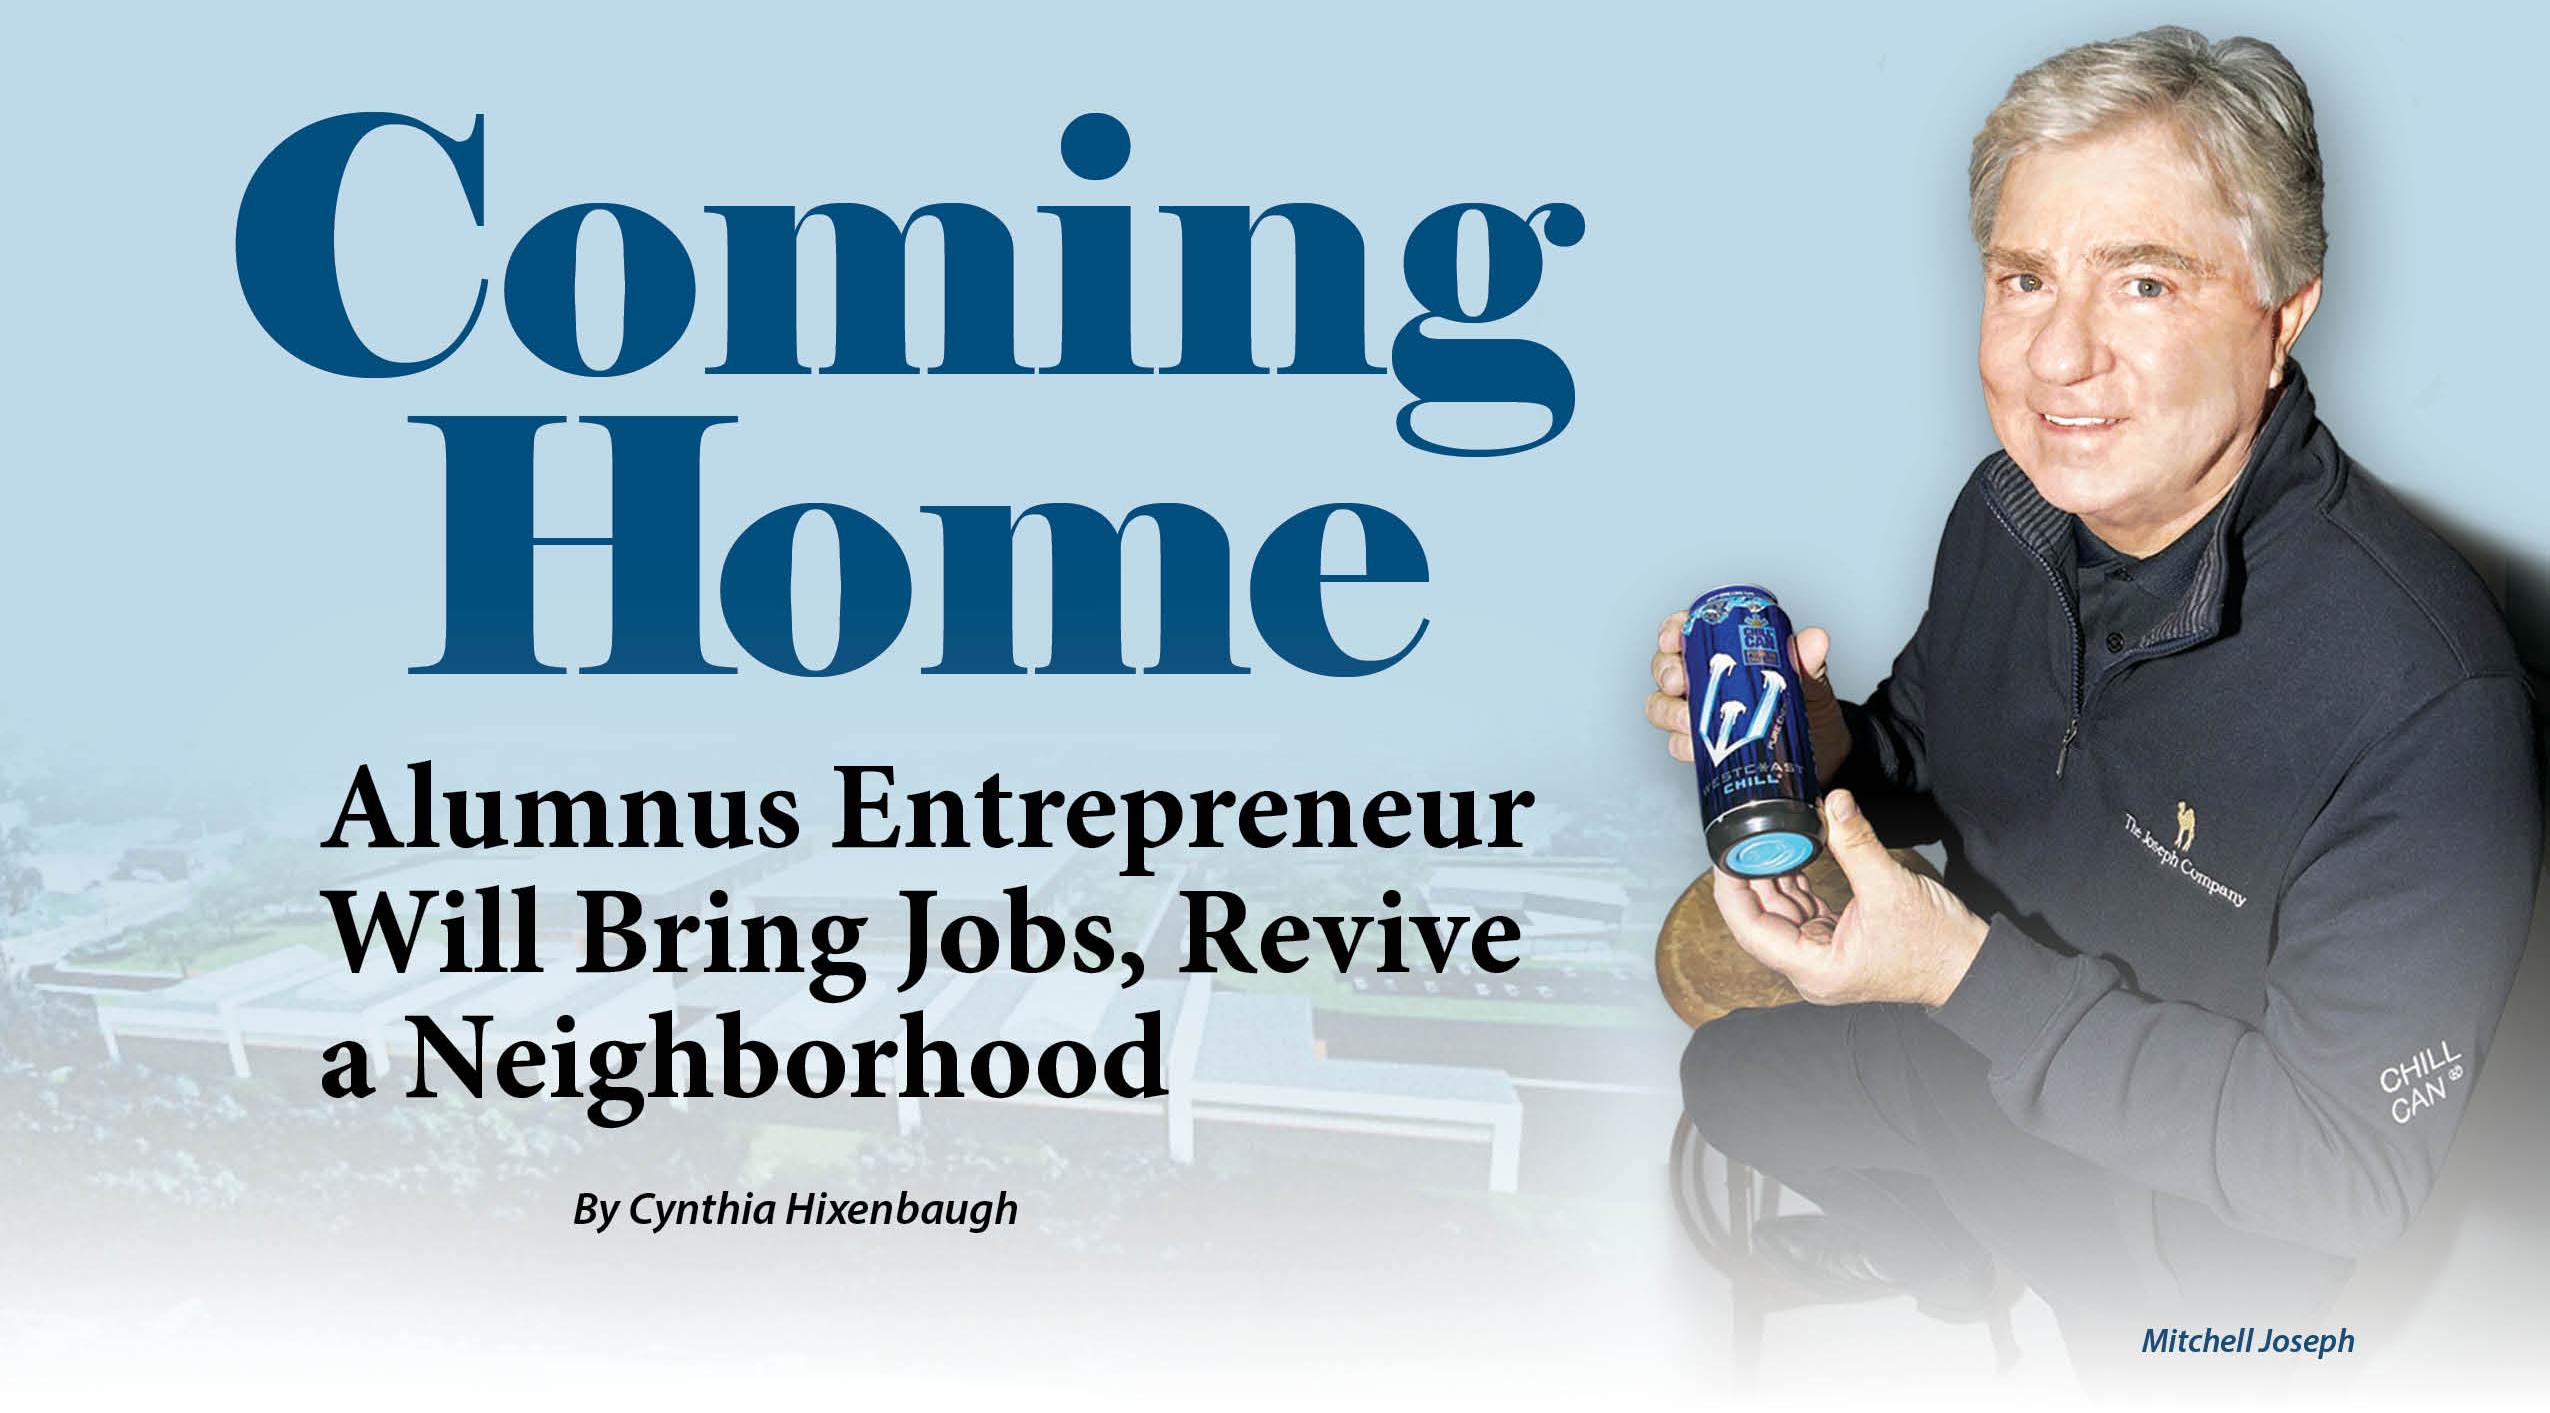 Coming Home - Alumnus Entrepreneur will Bring Jobs, Revive a Neighborhood